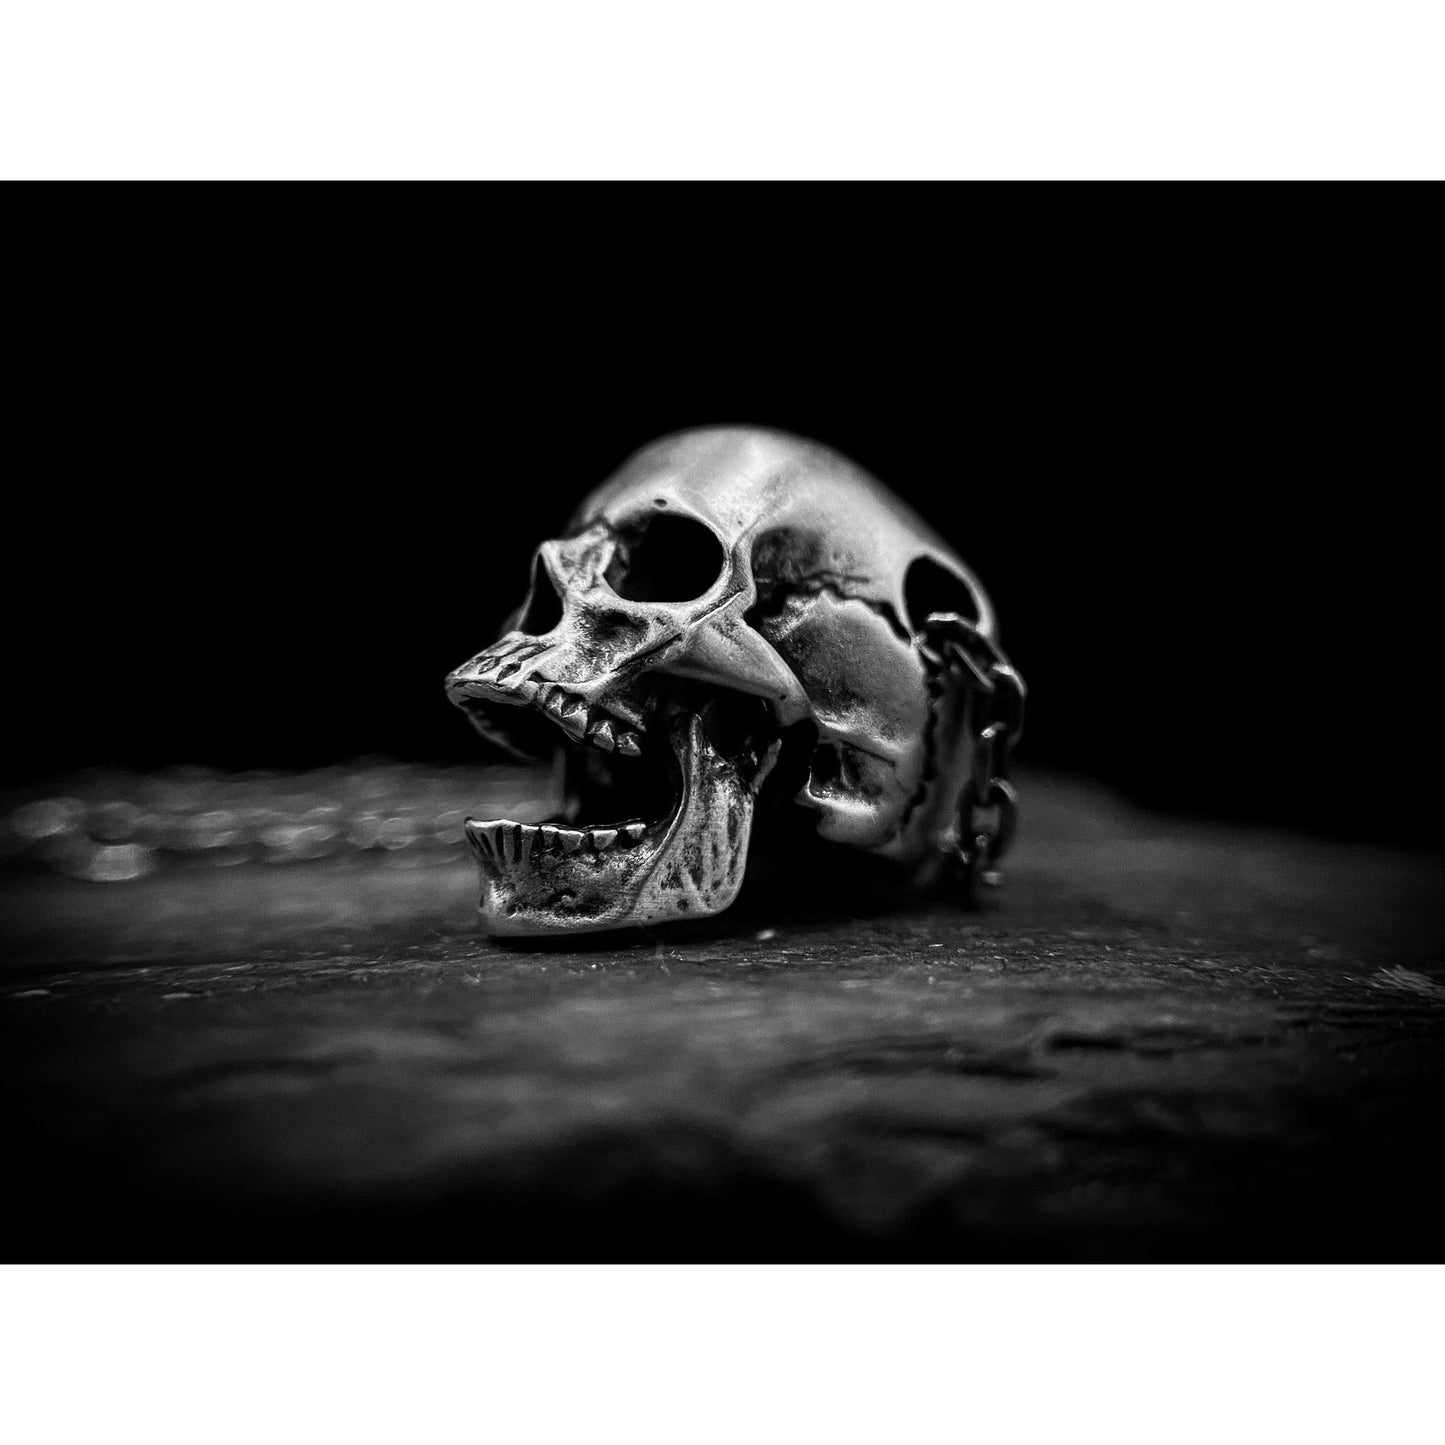 Memento Mori Skull Necklace - Sterling Silver